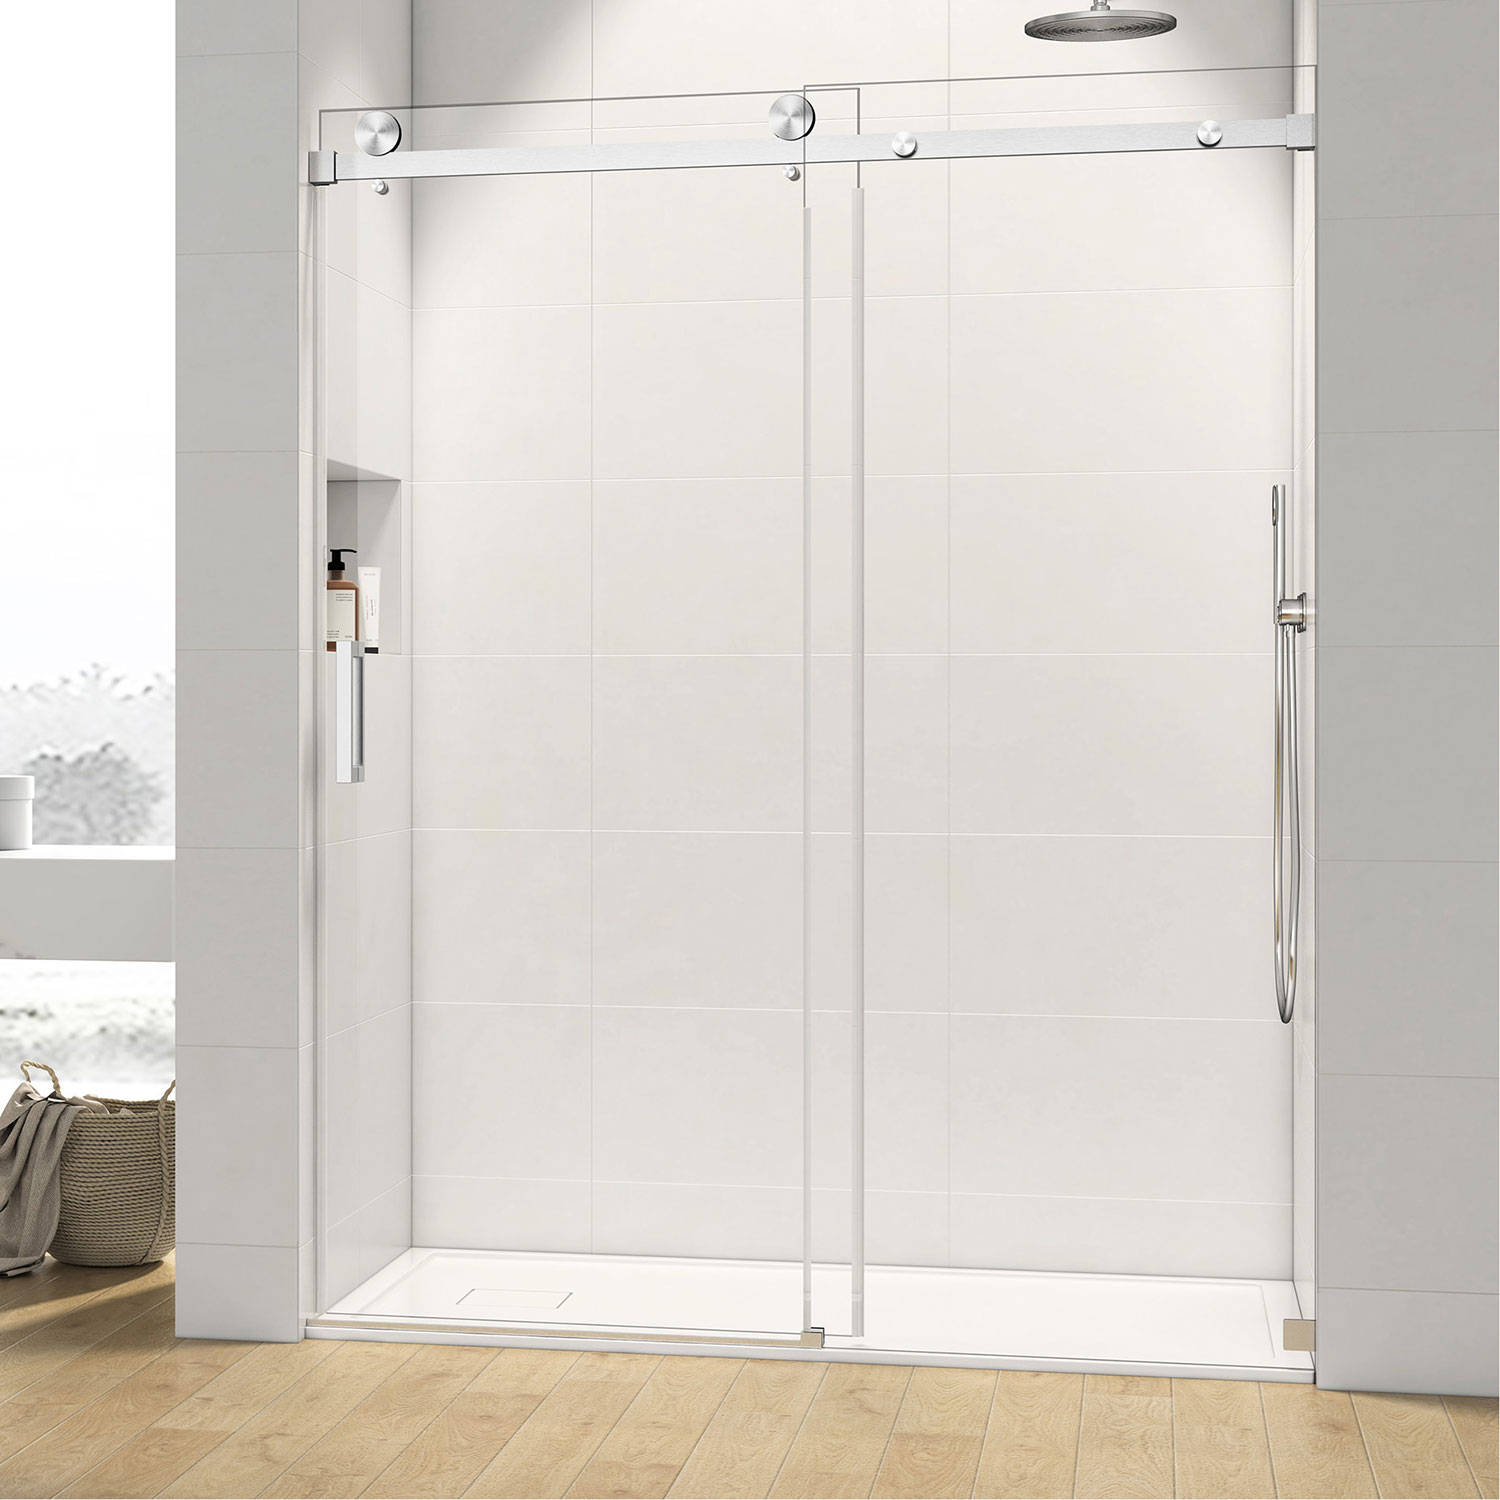 Sliding Glass Shower Doors, Bathroom Sliding Glass Door